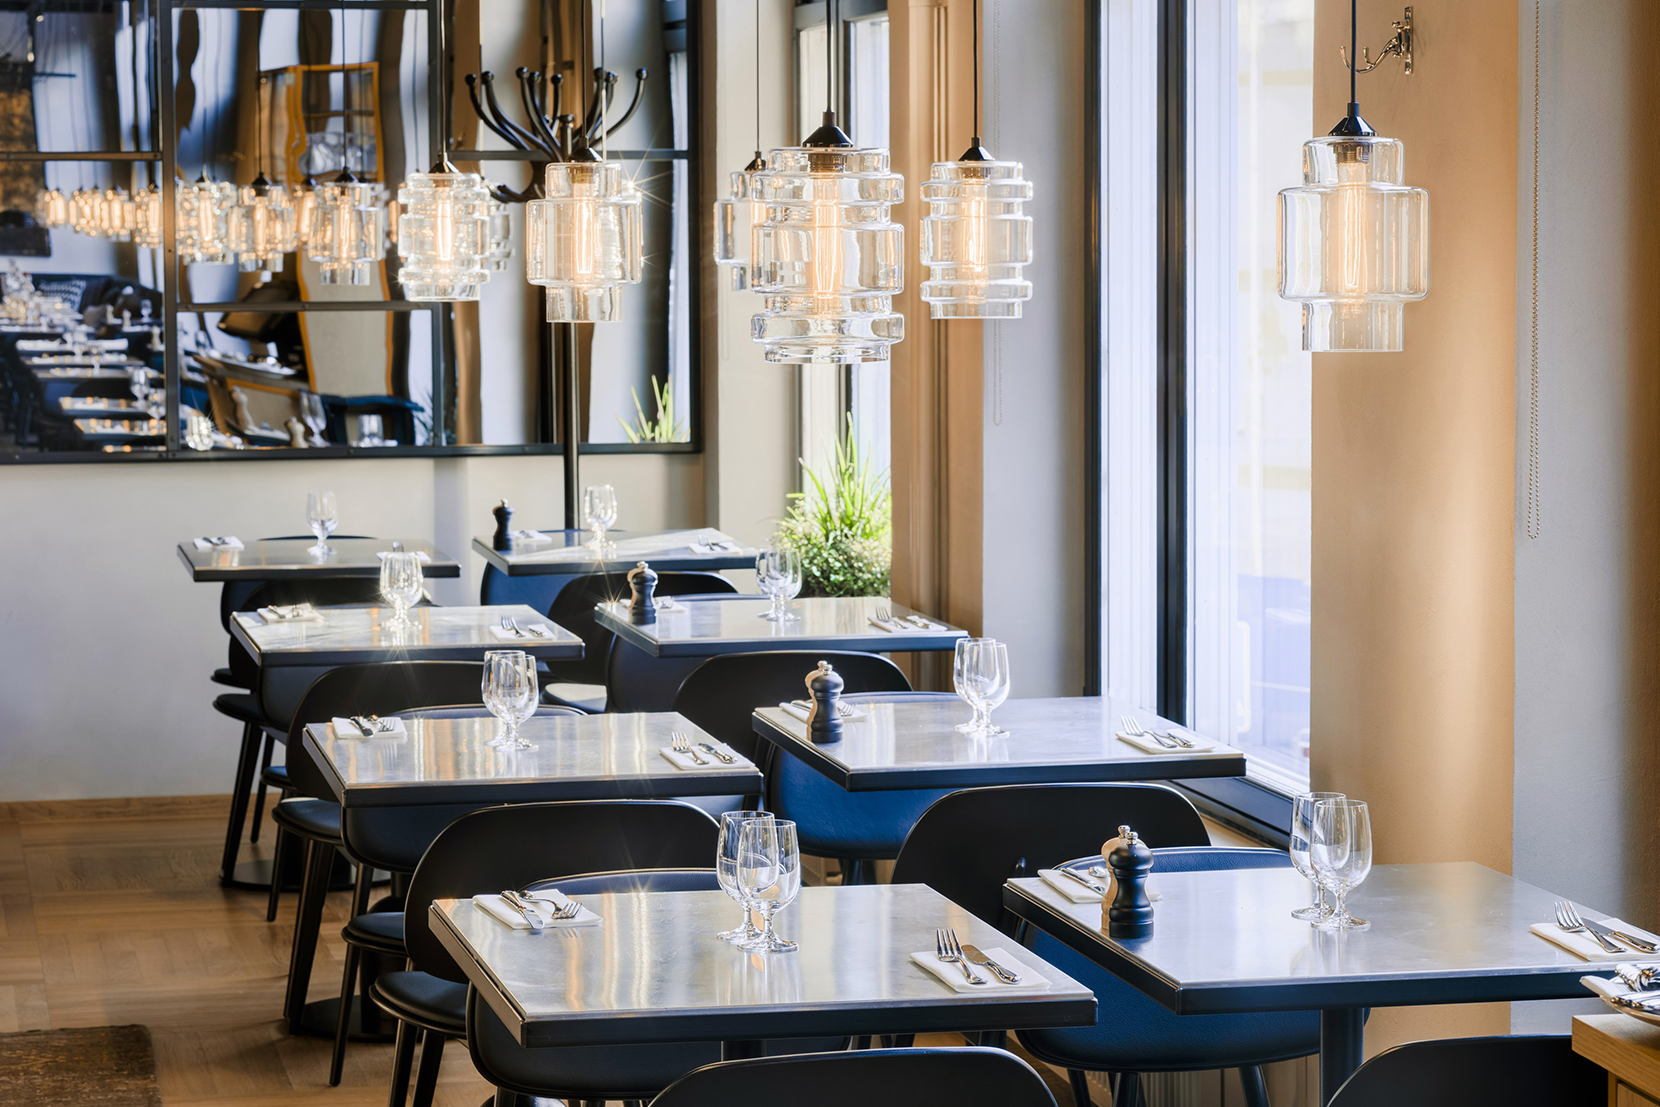 restaurant interior lighting